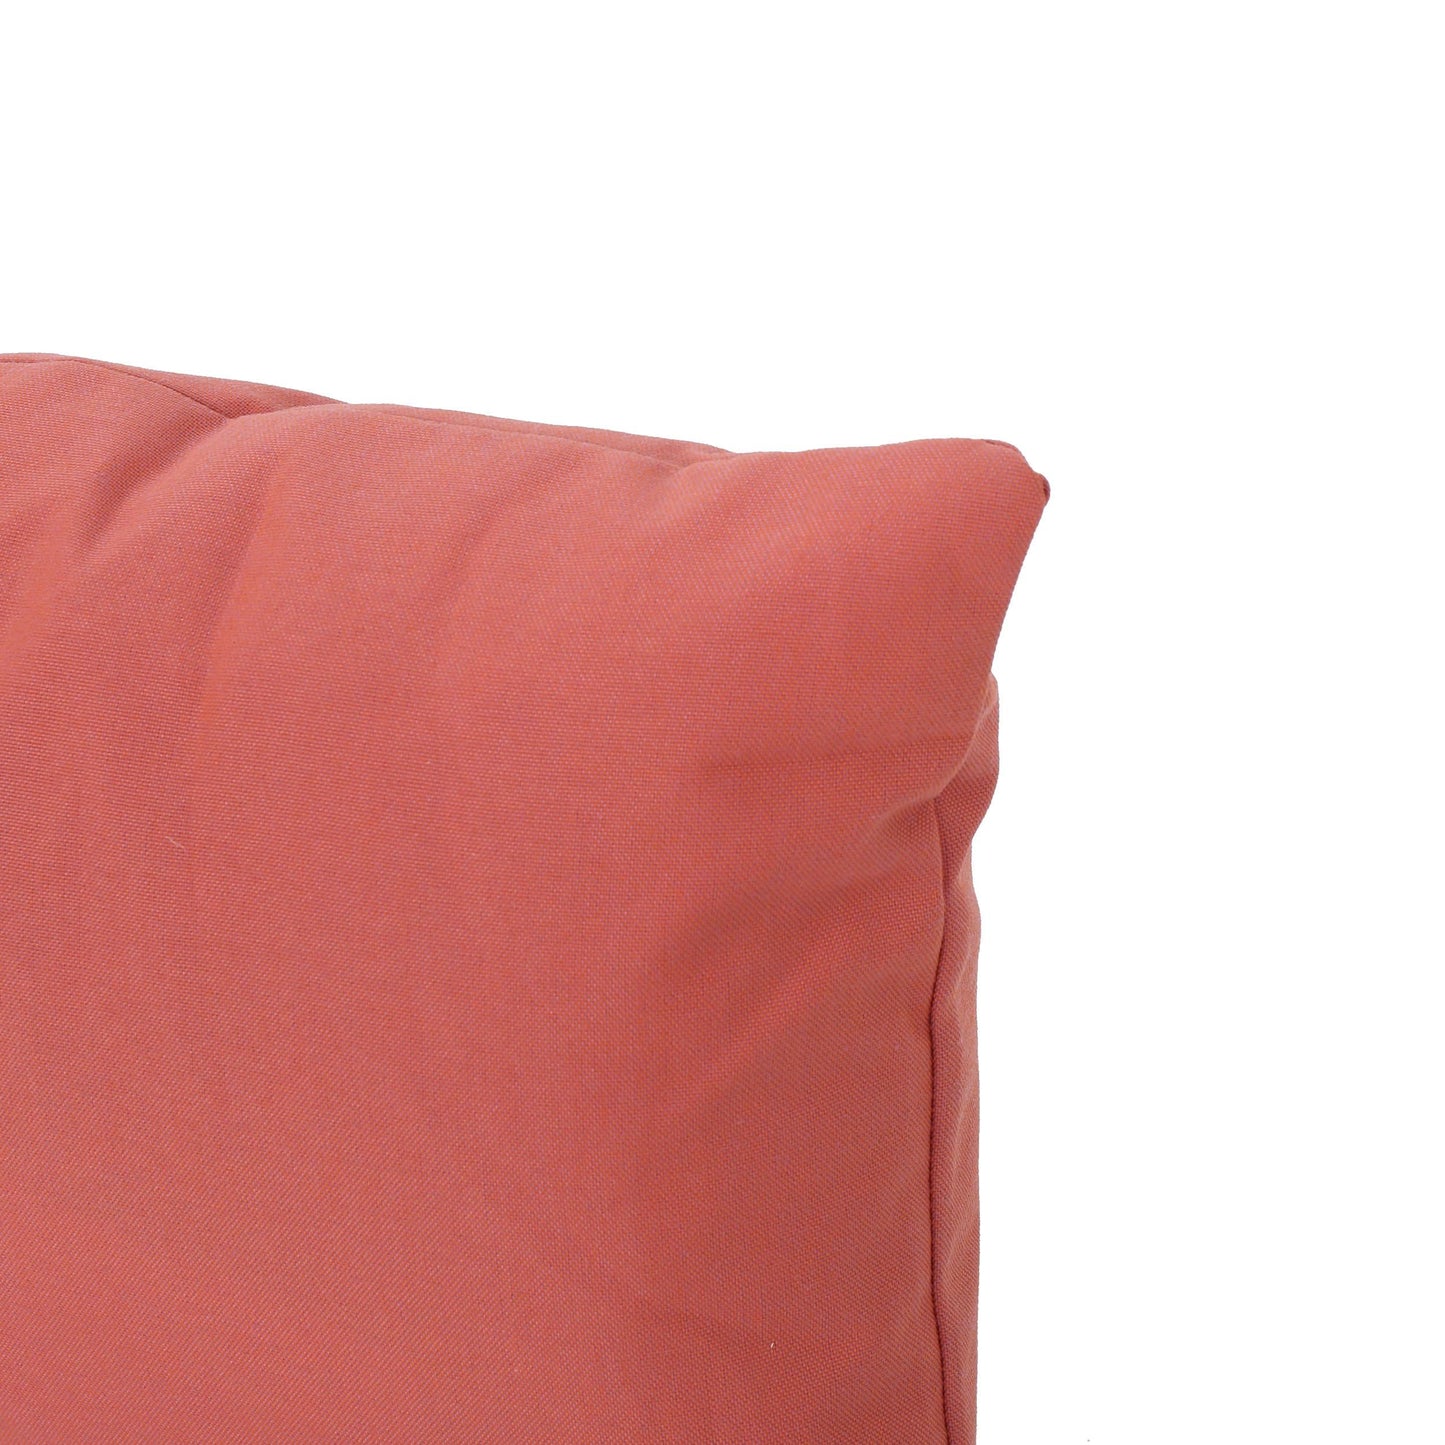 Coronado Outdoor Water Resistant Square and Rectangular Throw Pillows (Set of 4)